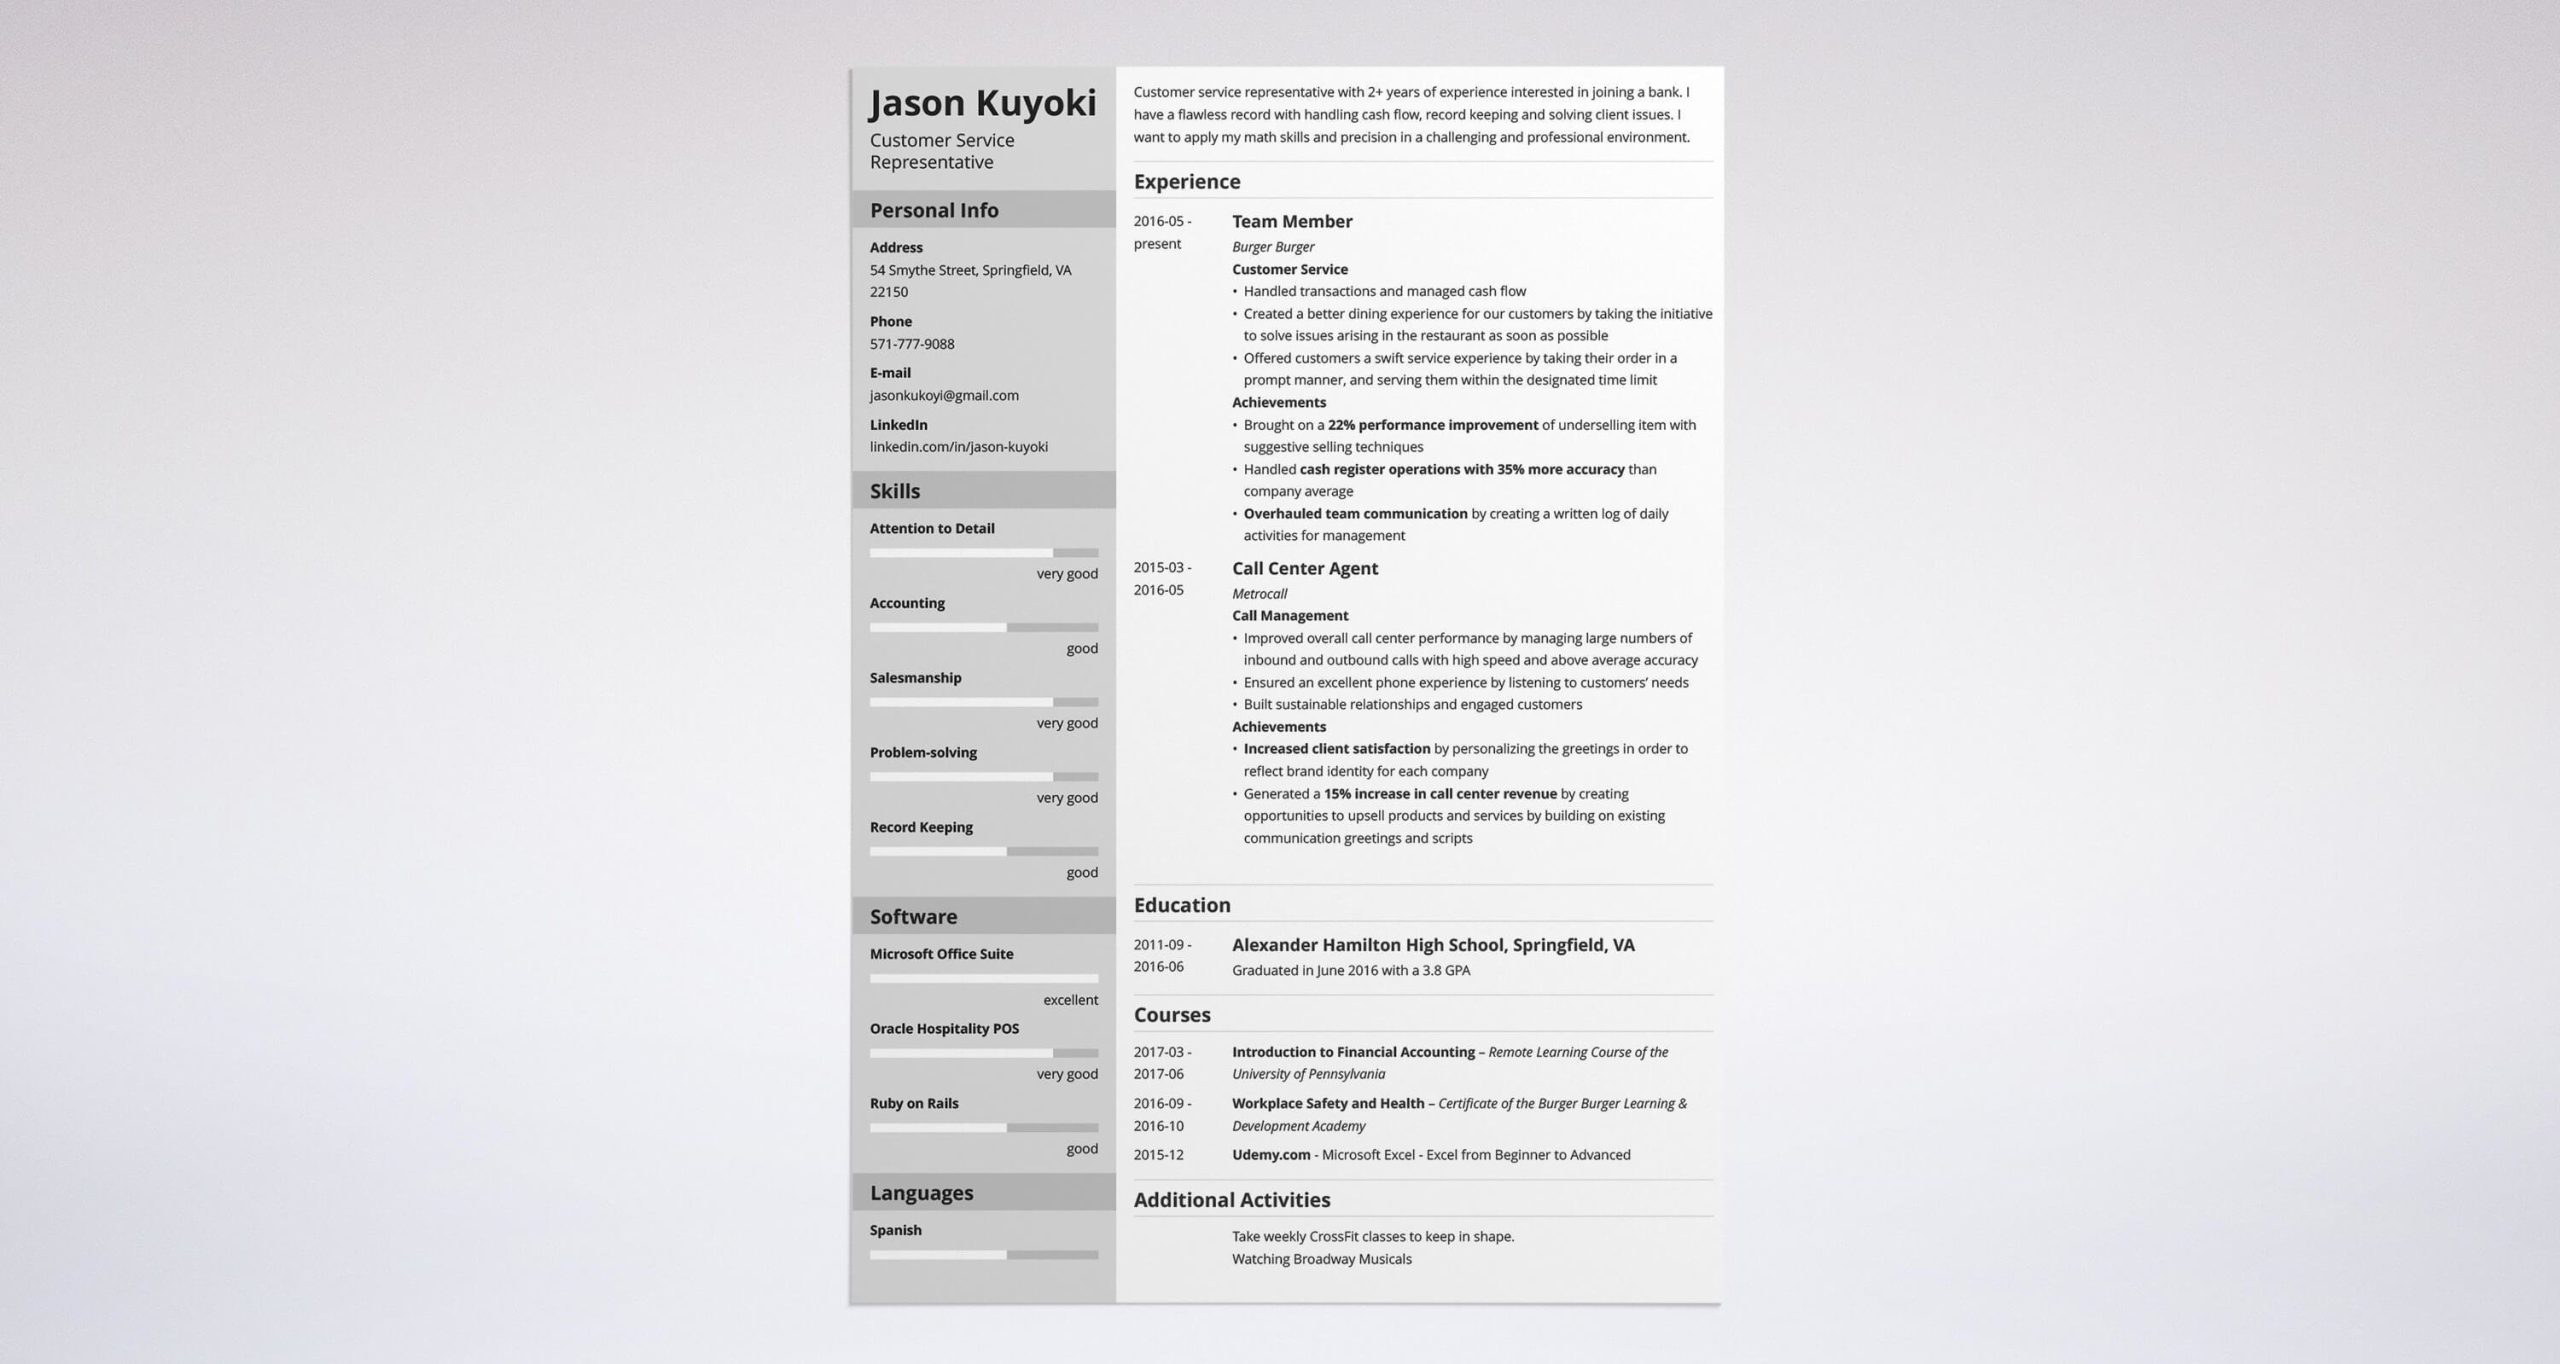 Sample Resume Objectives for Bank Teller Bank Teller Resume Examples (with Job Description & Skills)